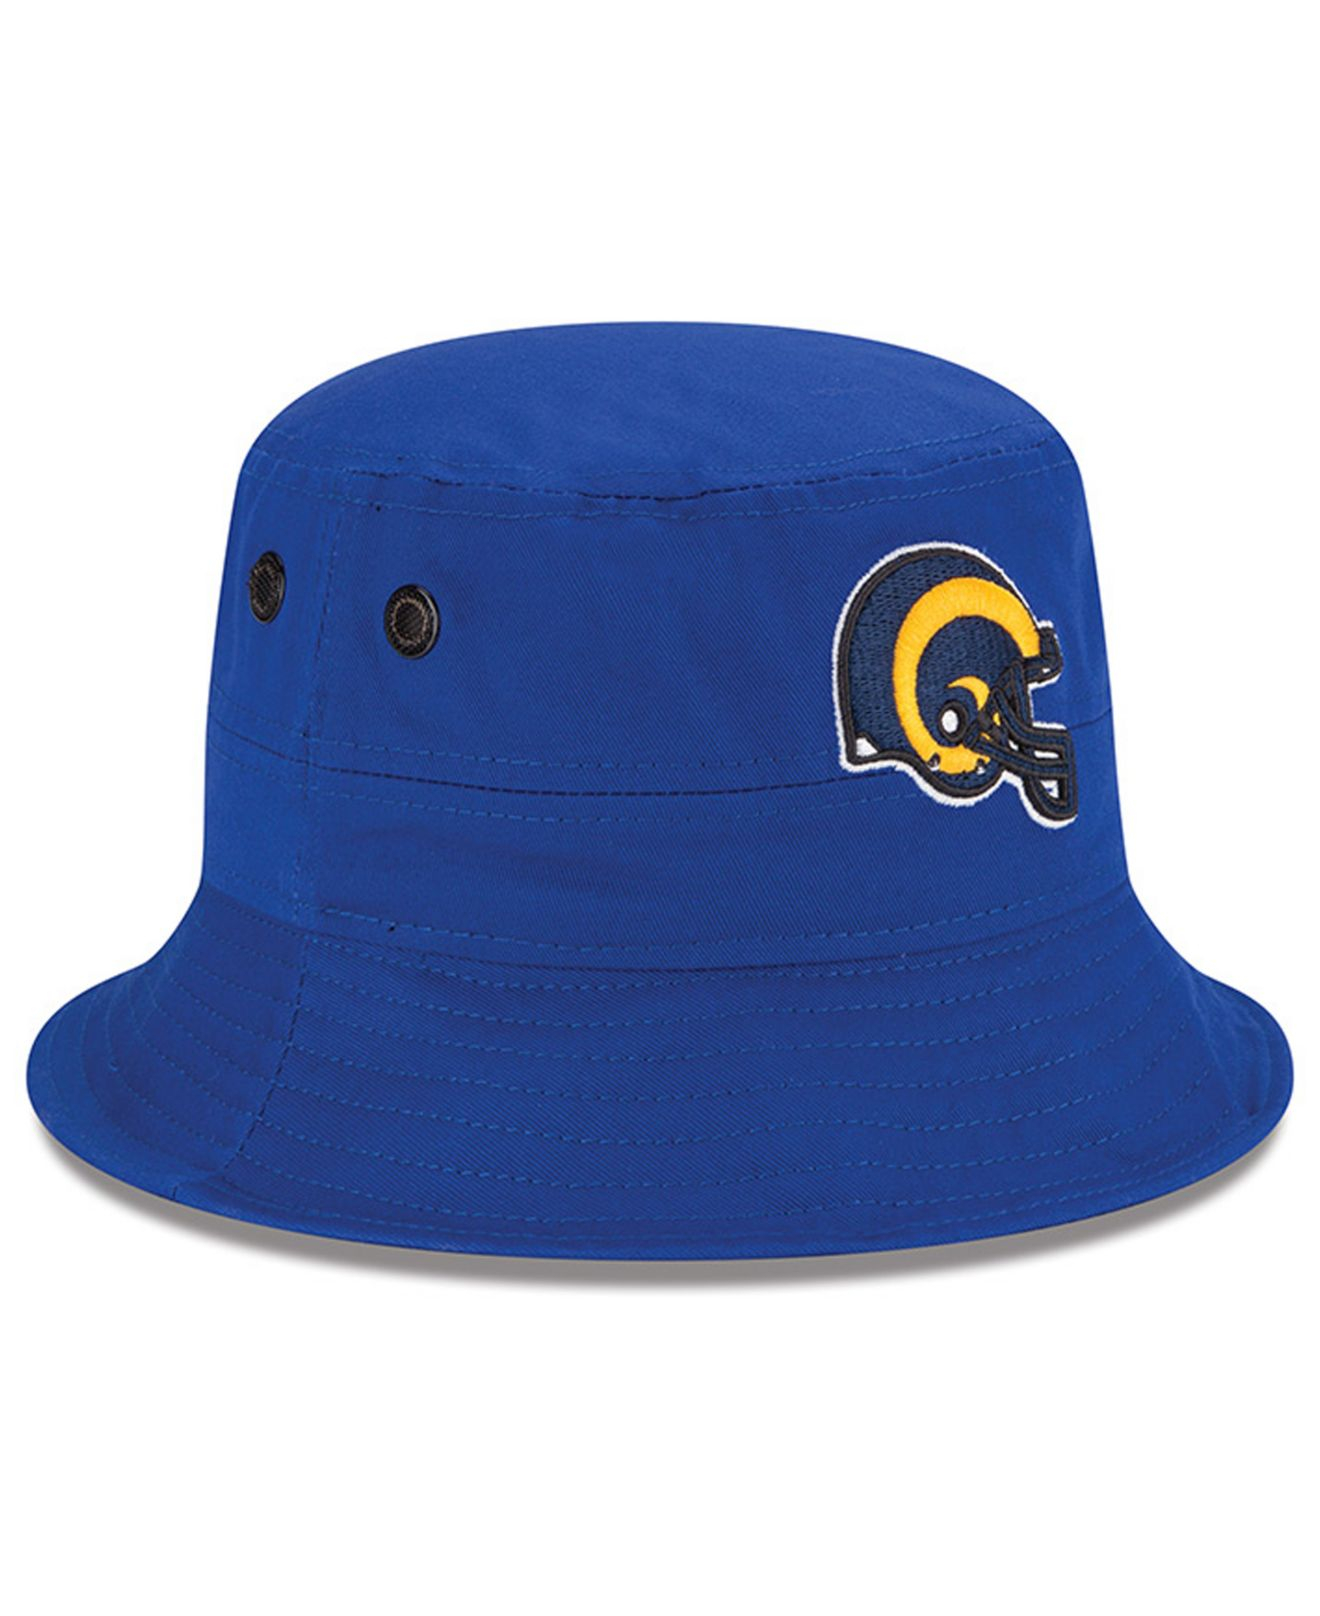 KTZ St. Louis Rams Multi Super Bowl Champ Bucket Hat in Blue for